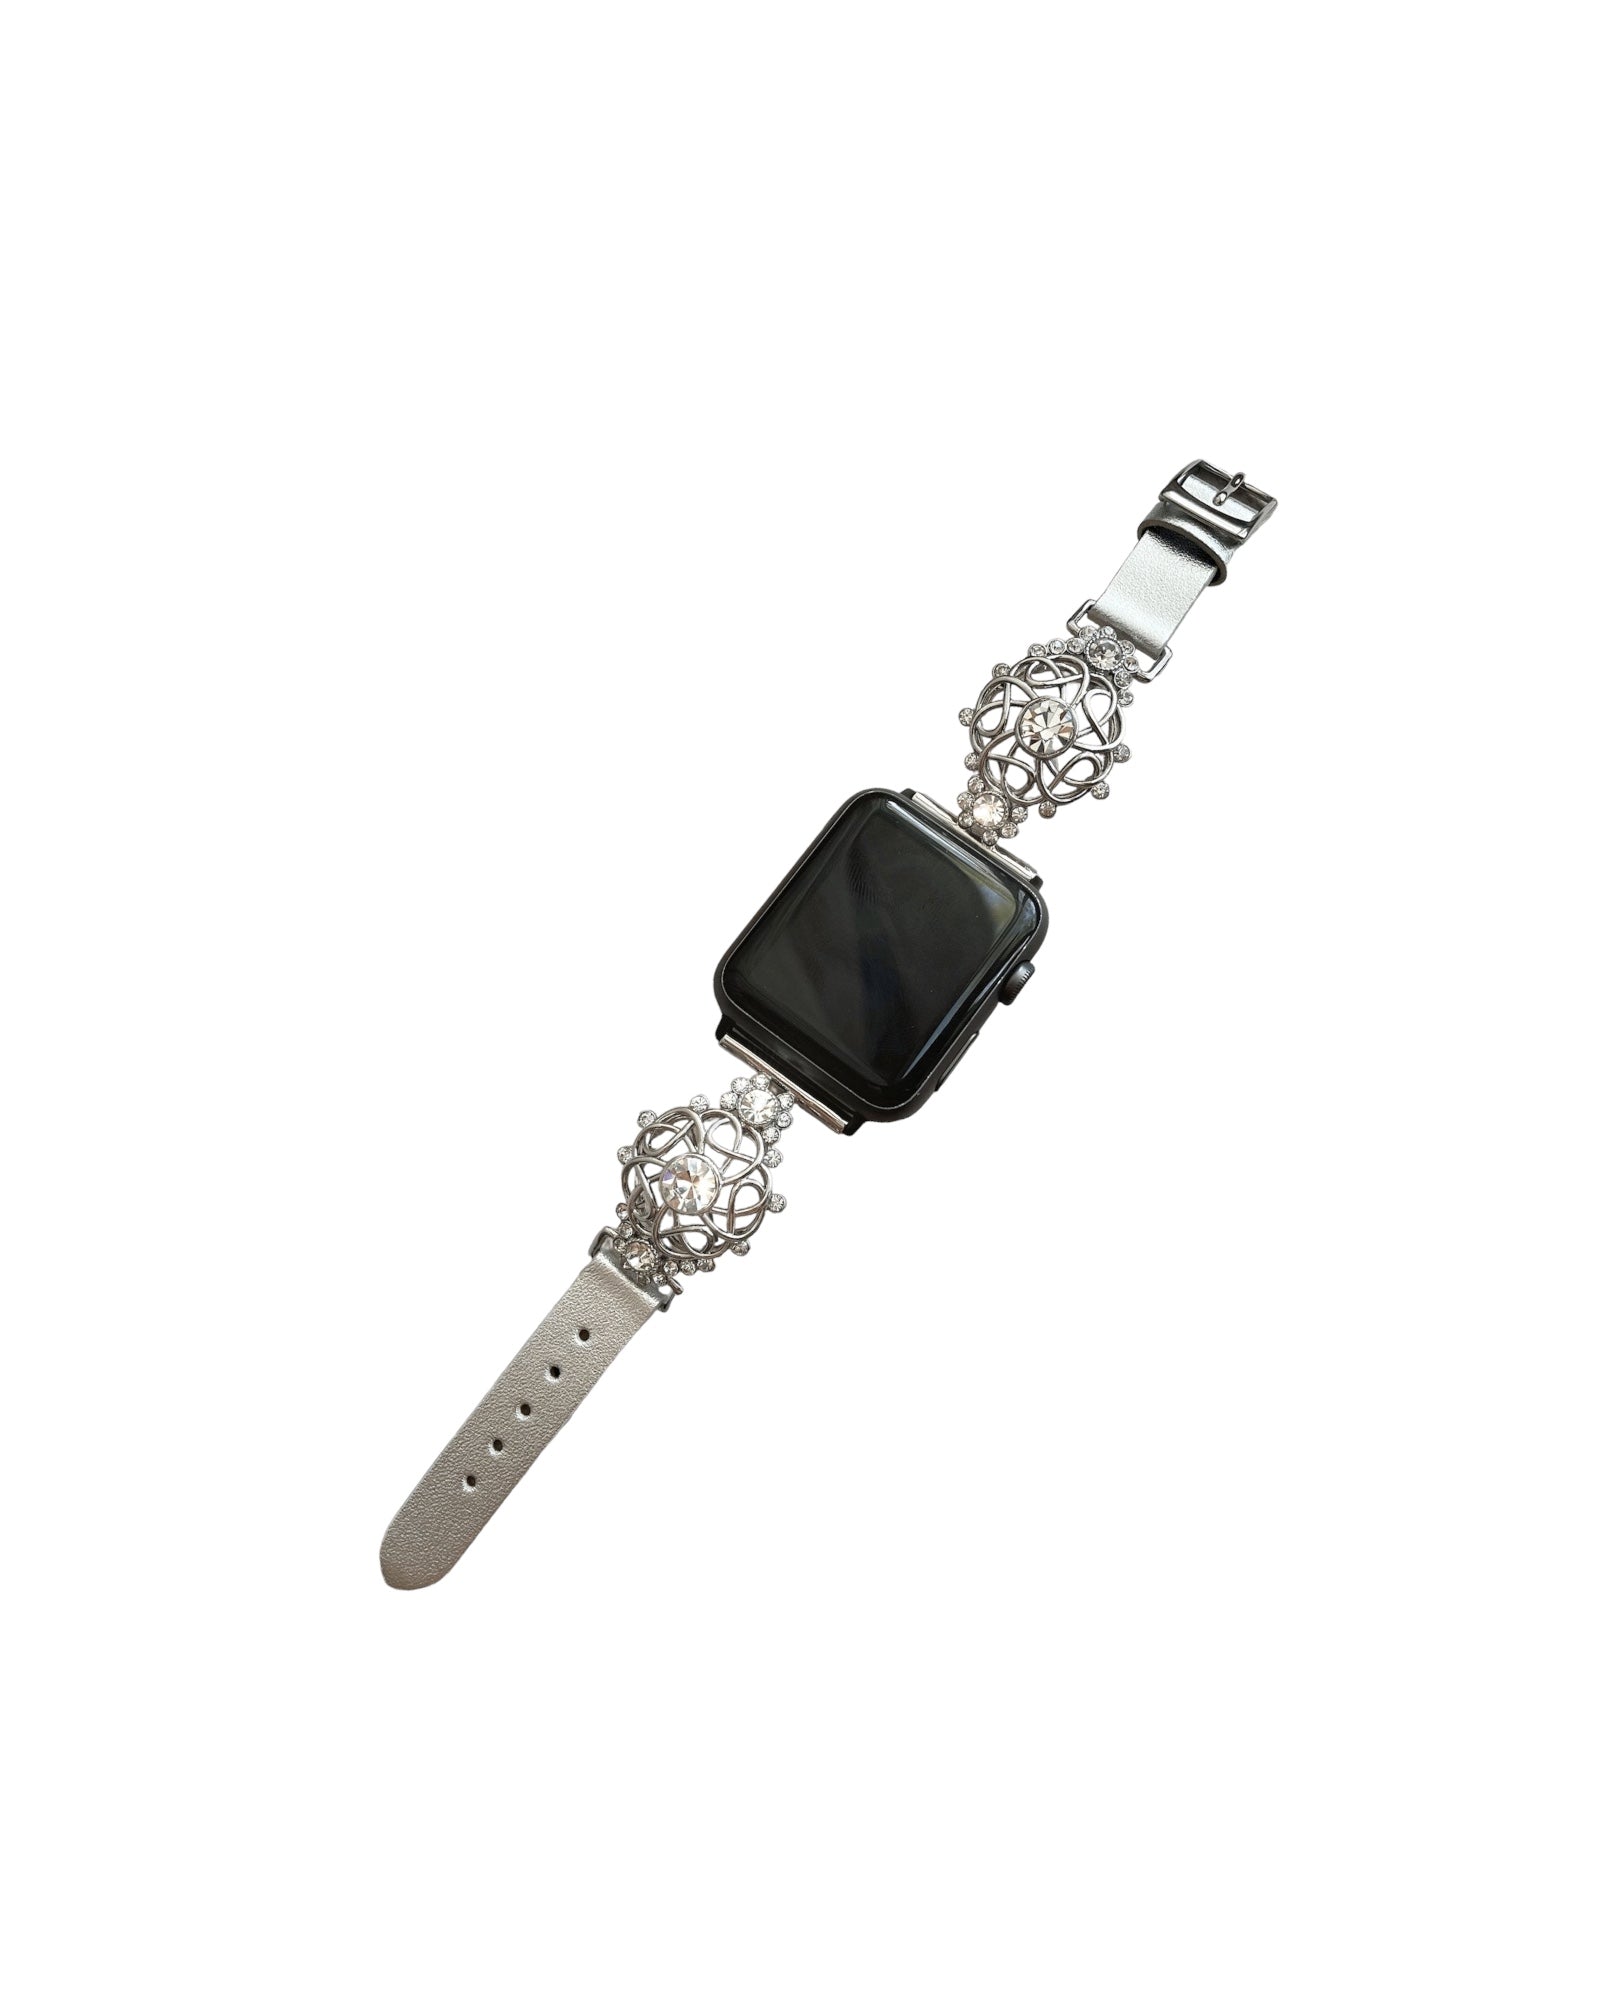 Metal Filigree Bracelet Diamond Accent Watch Band